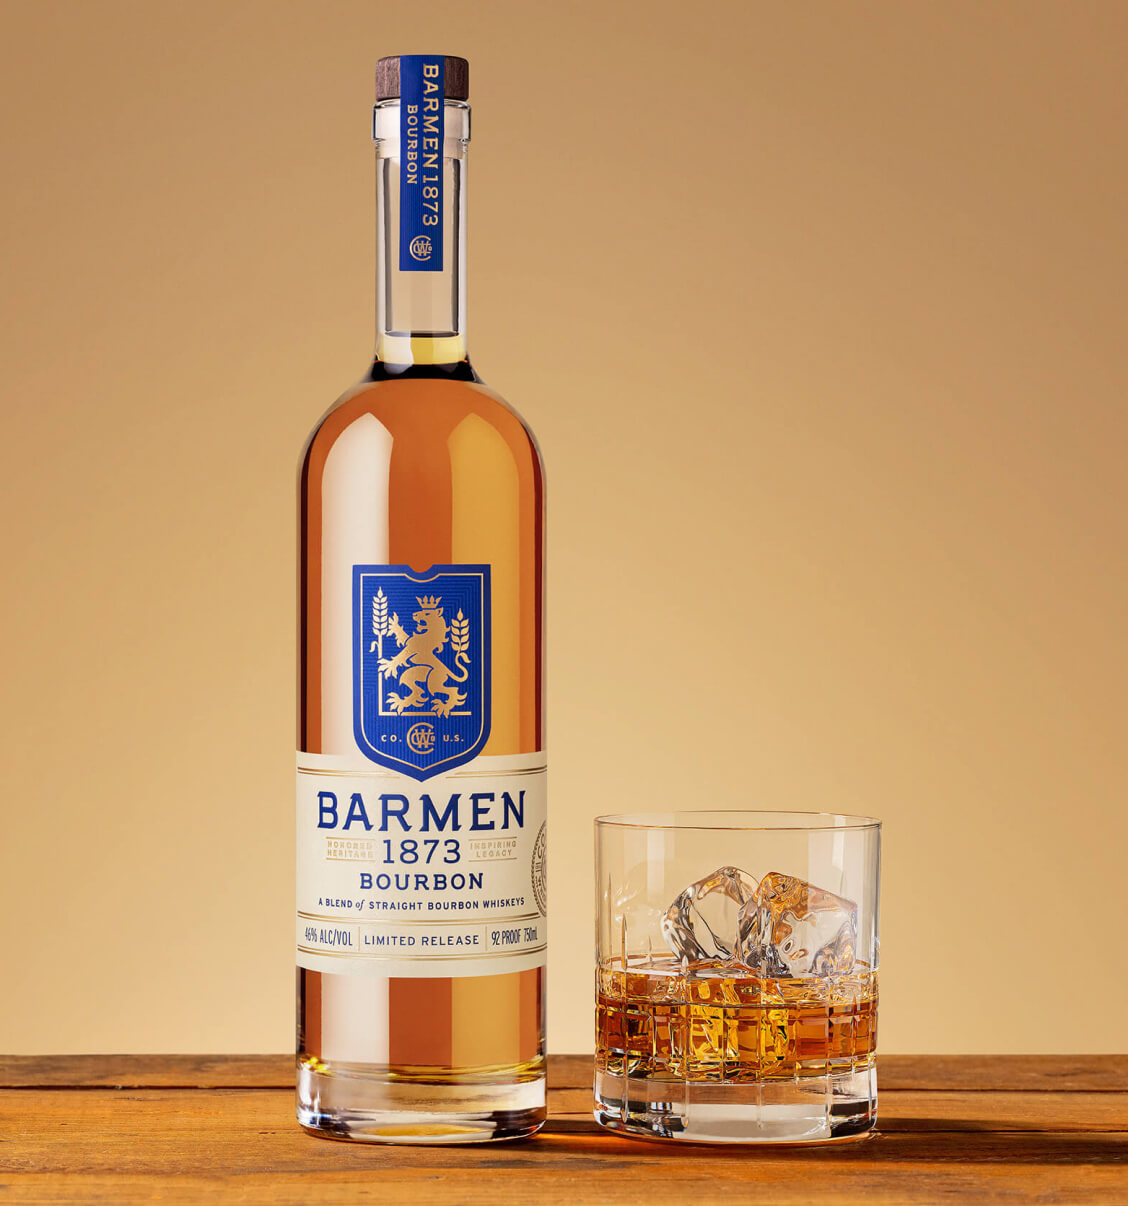 barmen bottle and glass of whiskey